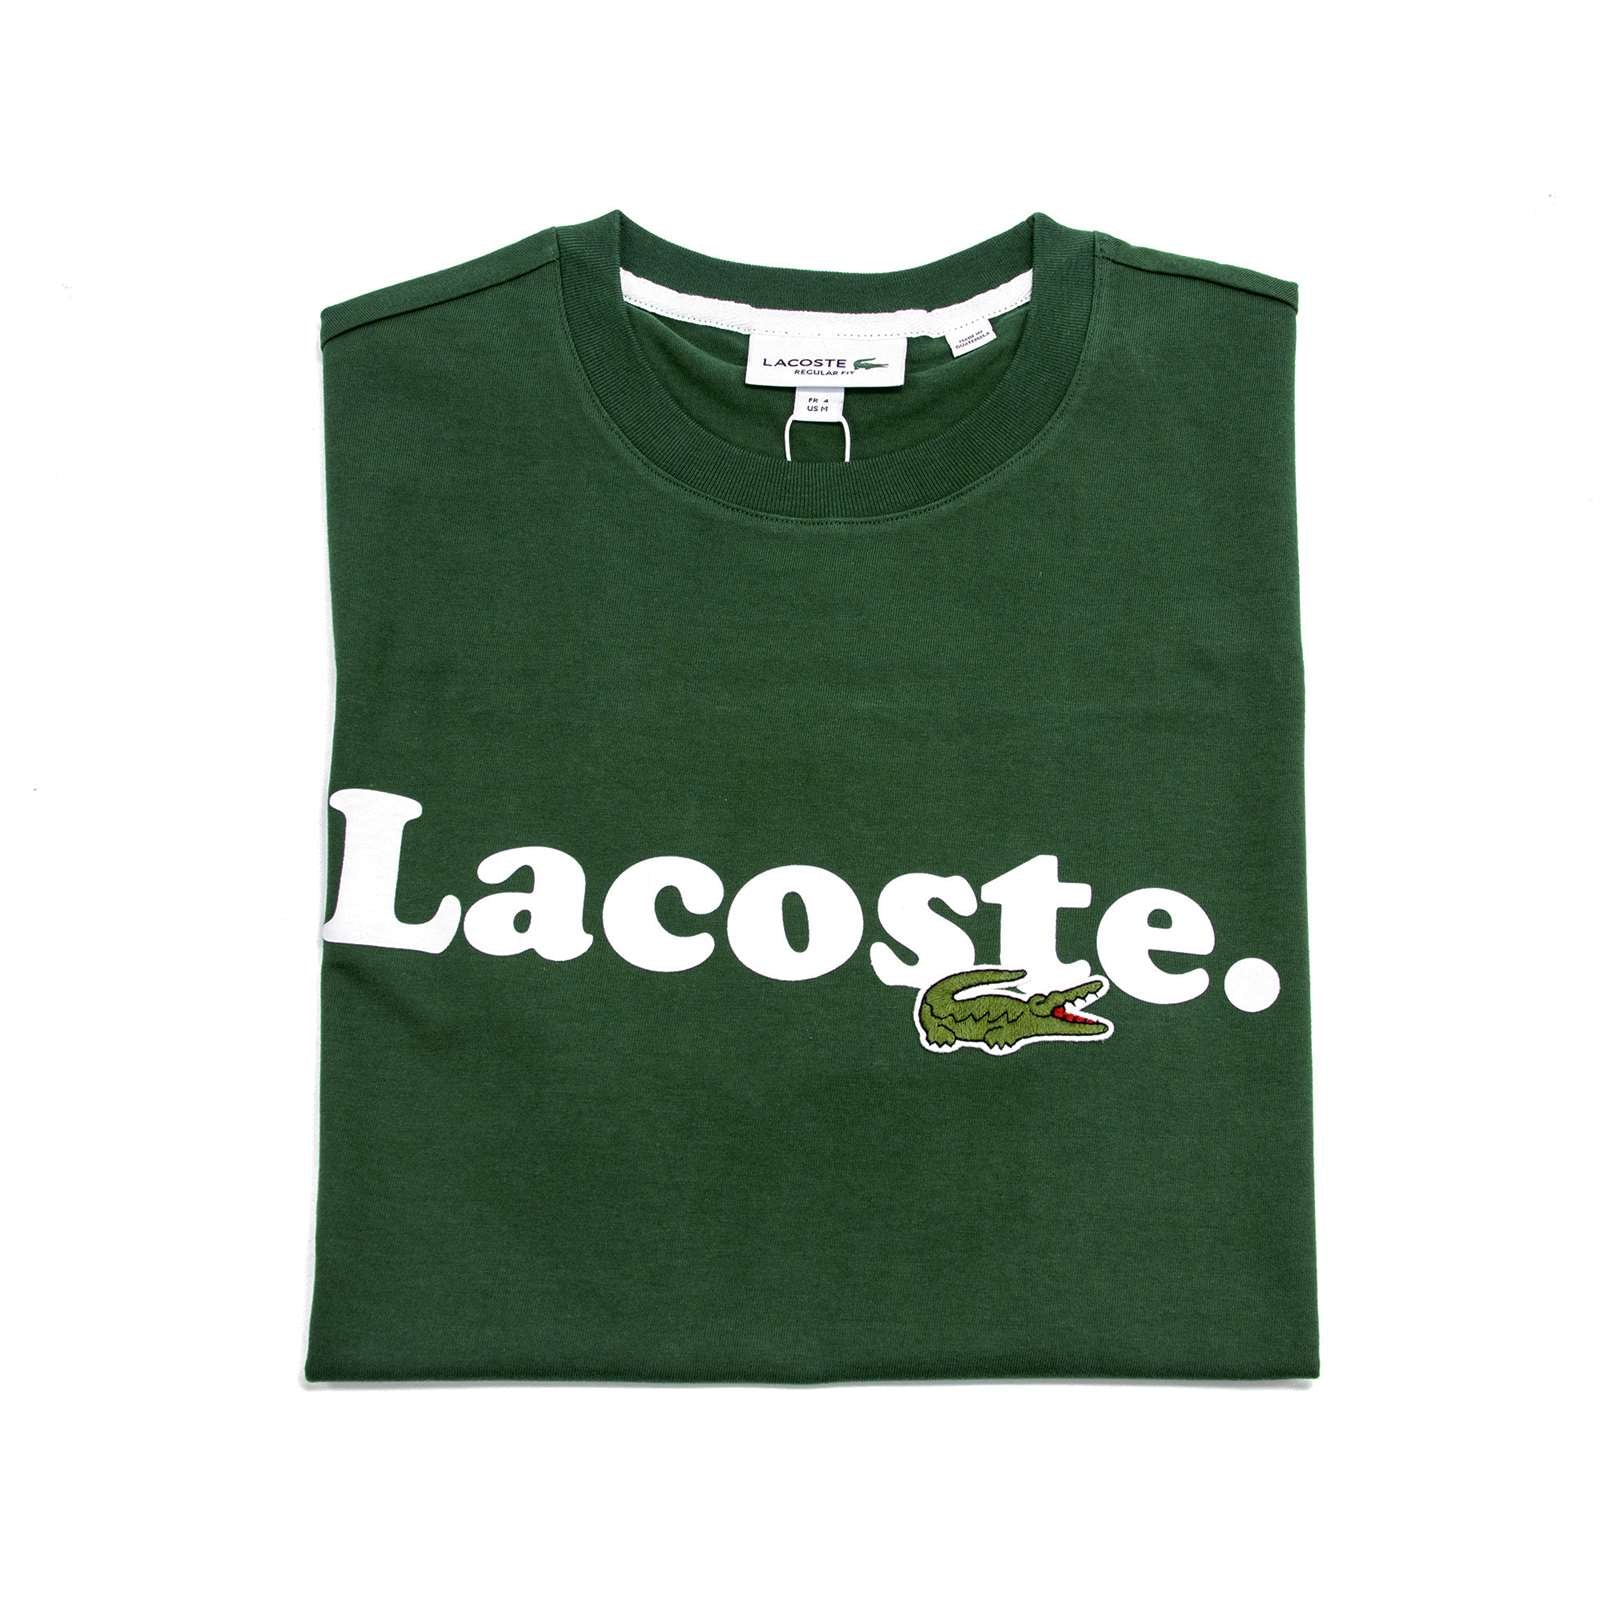 Lacoste Men Lacoste And Crocodile Branded Cotton T-Shirt